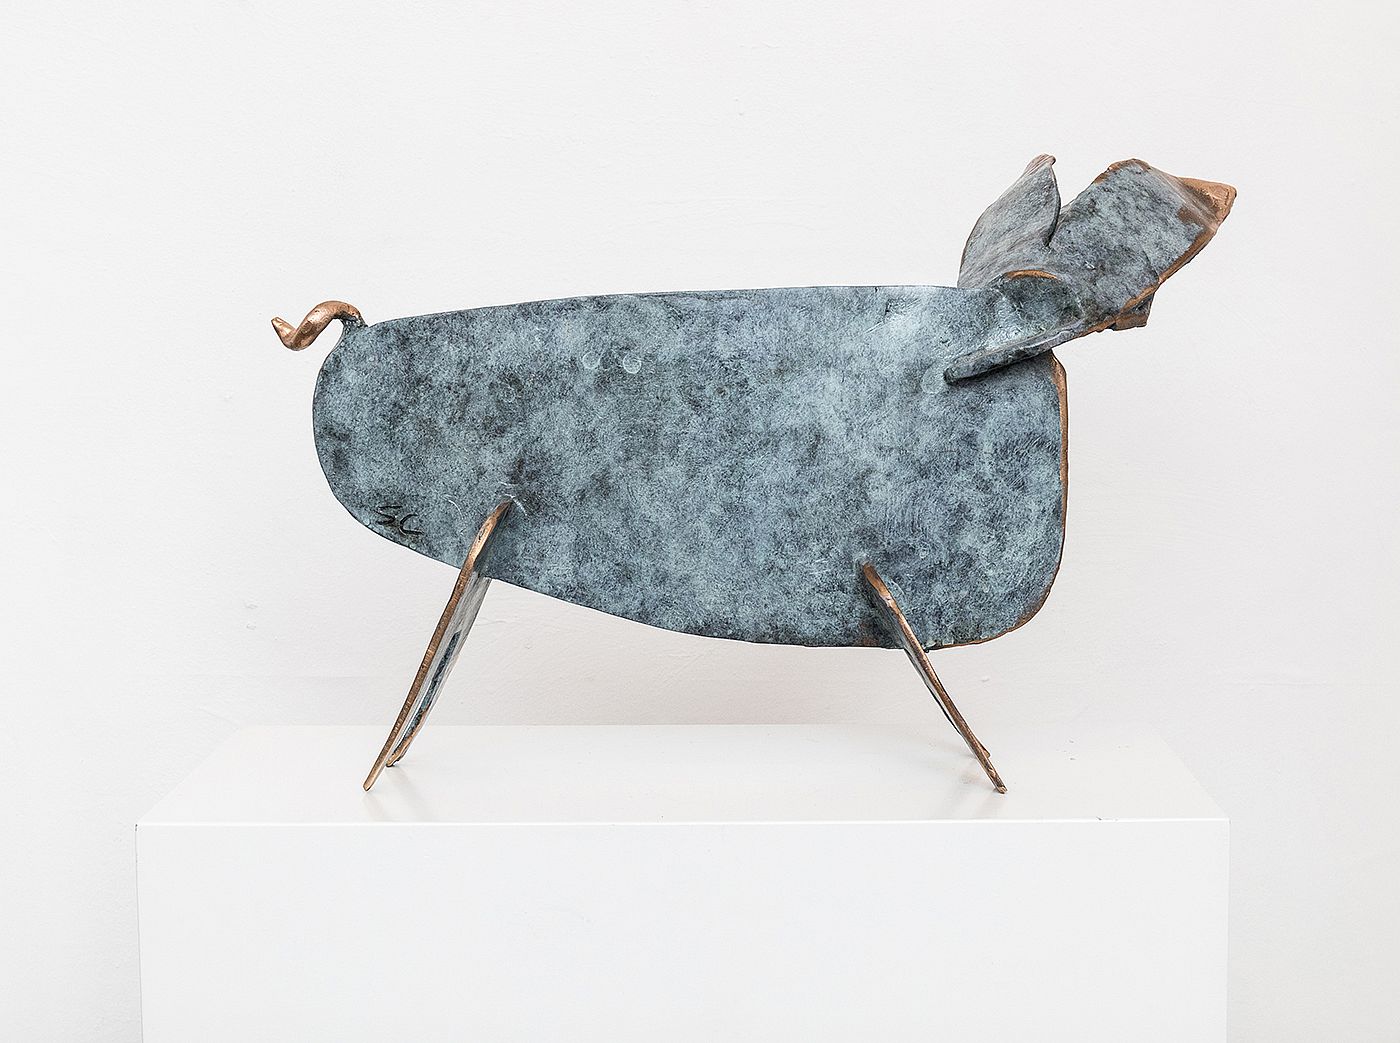 Seamus Connolly - Large Bronze Pig